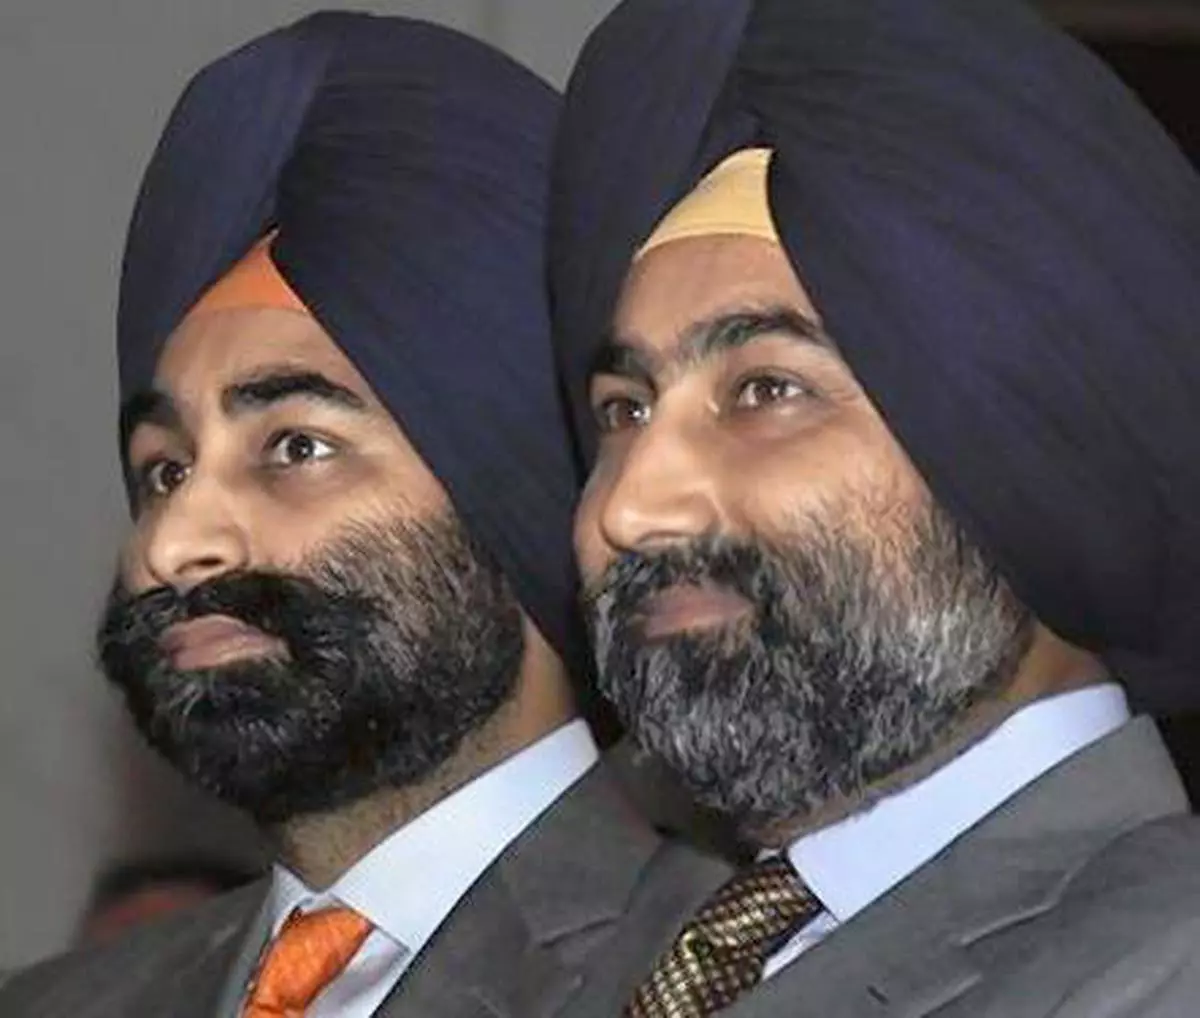 Malvinder Mohan Singh (right) and Shivinder Mohan Singh